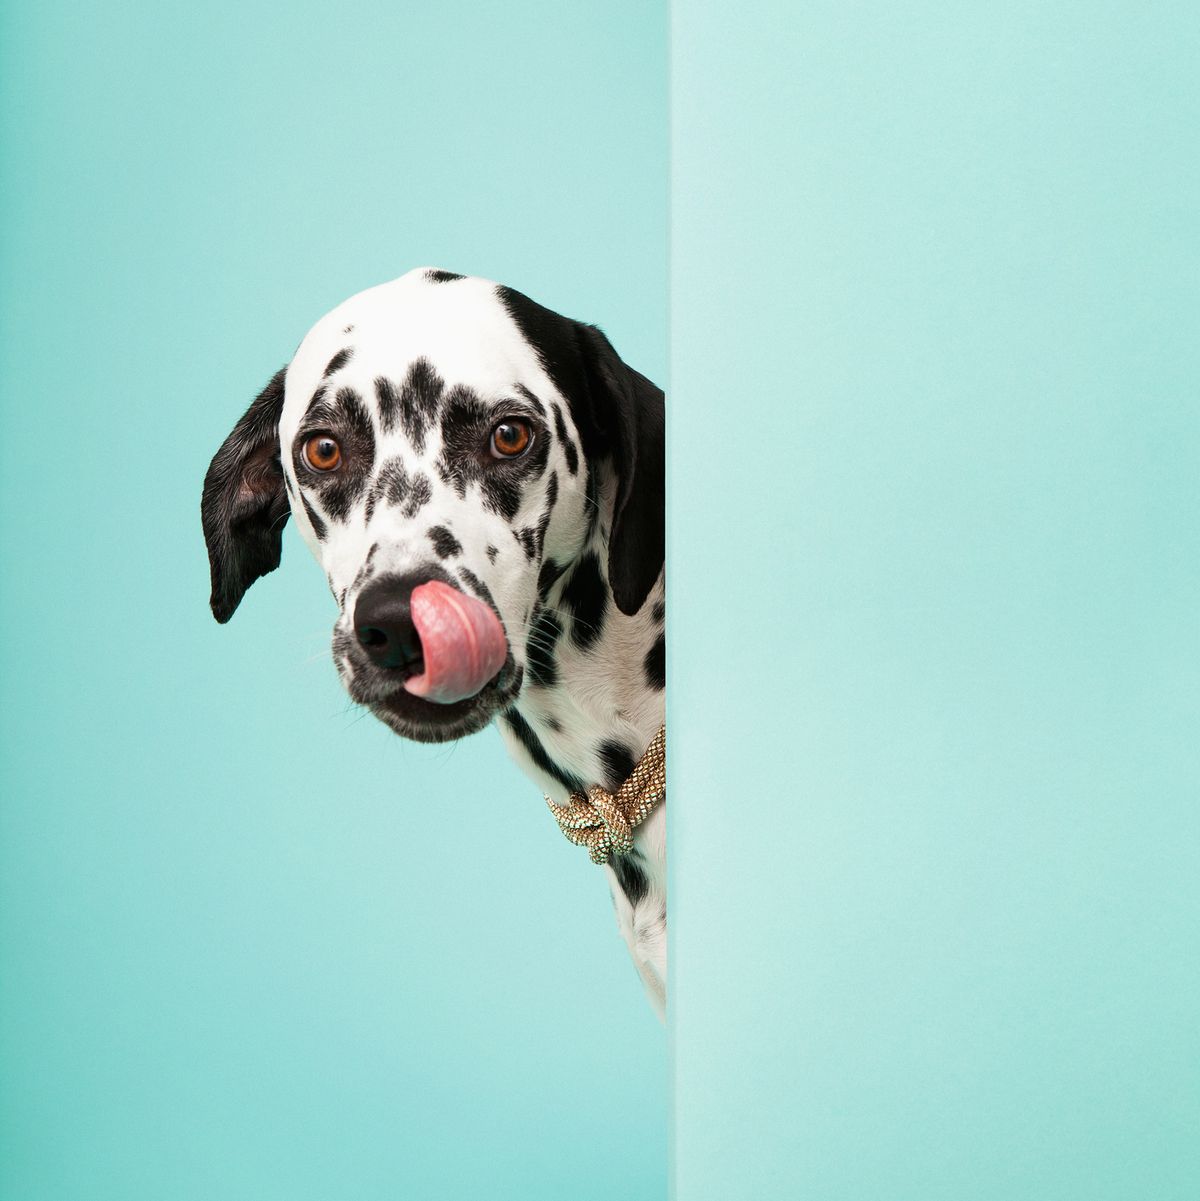 Dalmatian Dog Licking His Nose